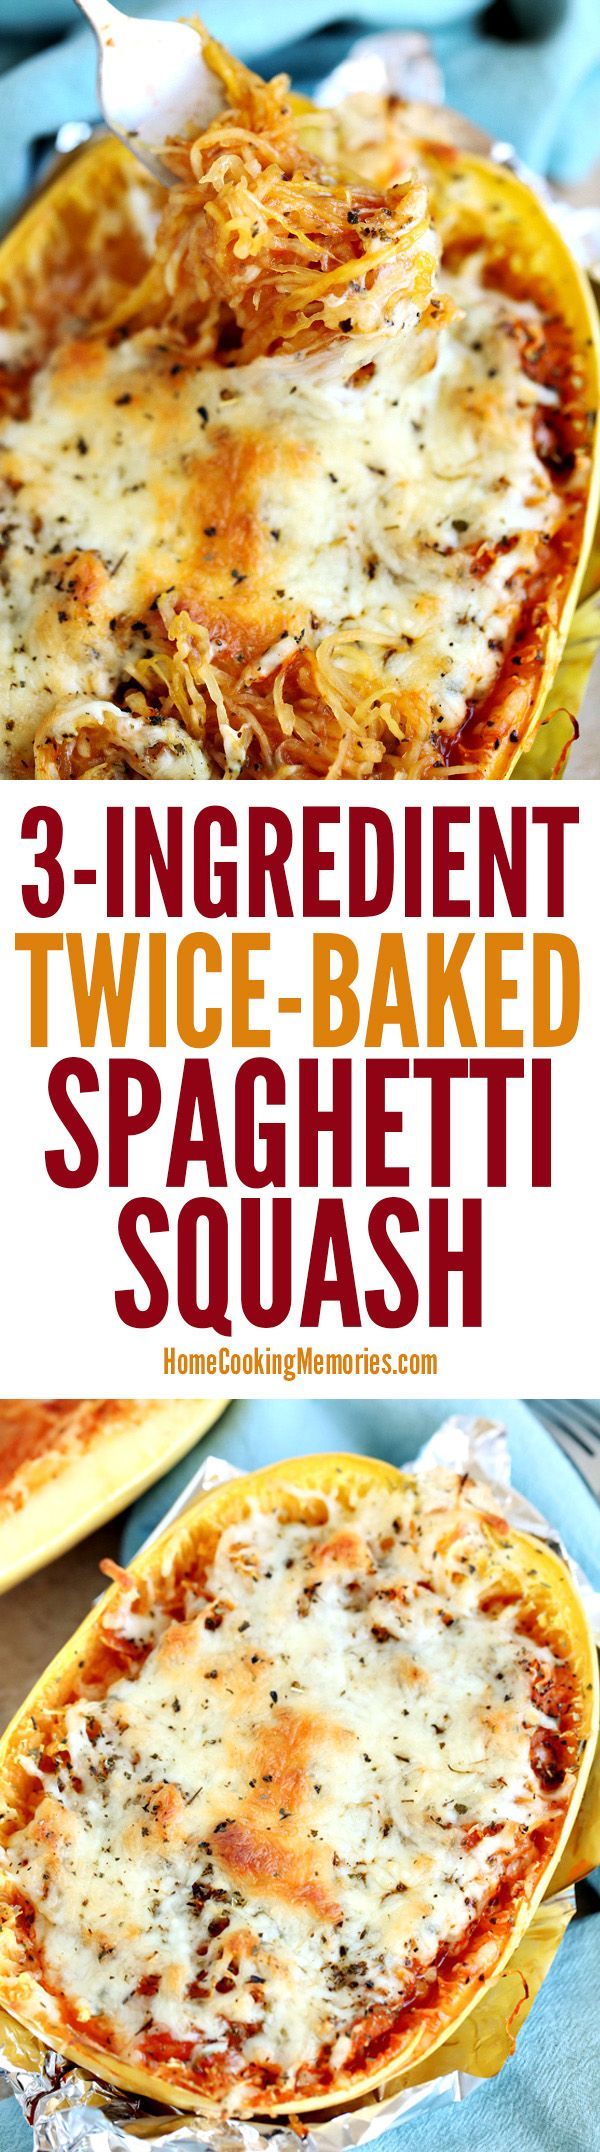 This Twice-Baked Spaghetti Squash recipe is an easy dinner idea that only needs 3-ingredients: spaghetti squash, mozzarella